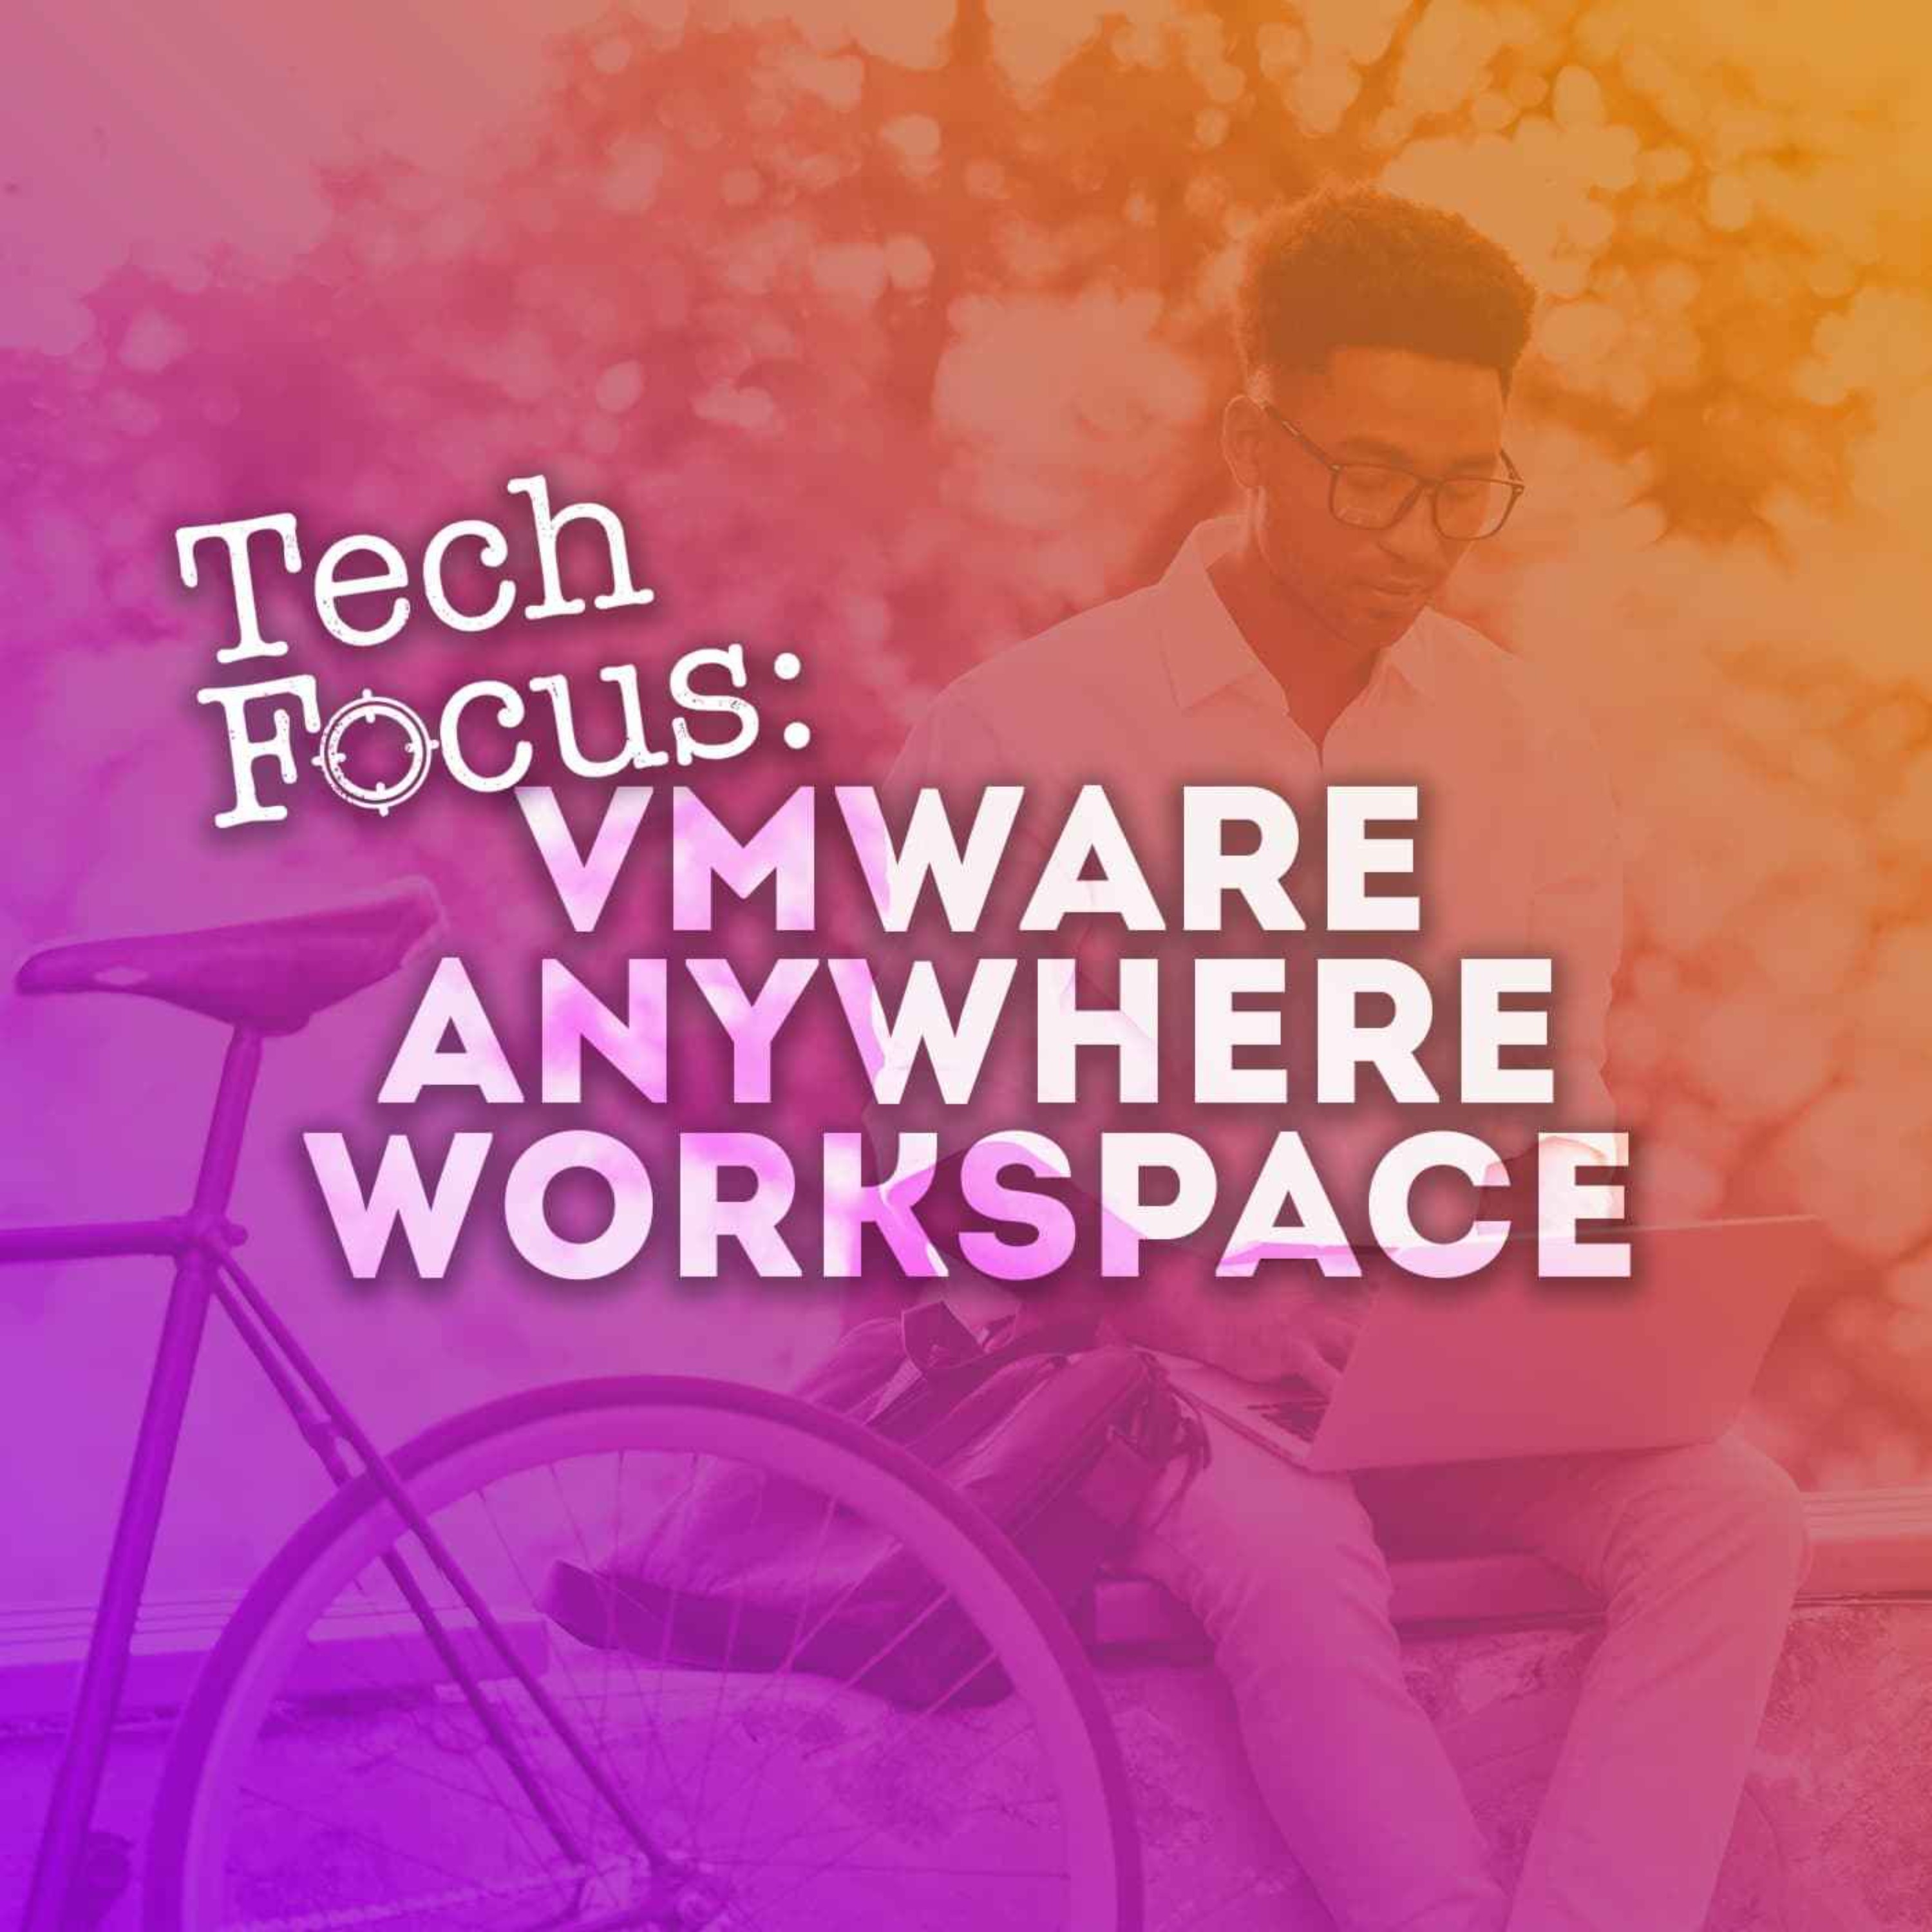 VMware Anywhere Workspace